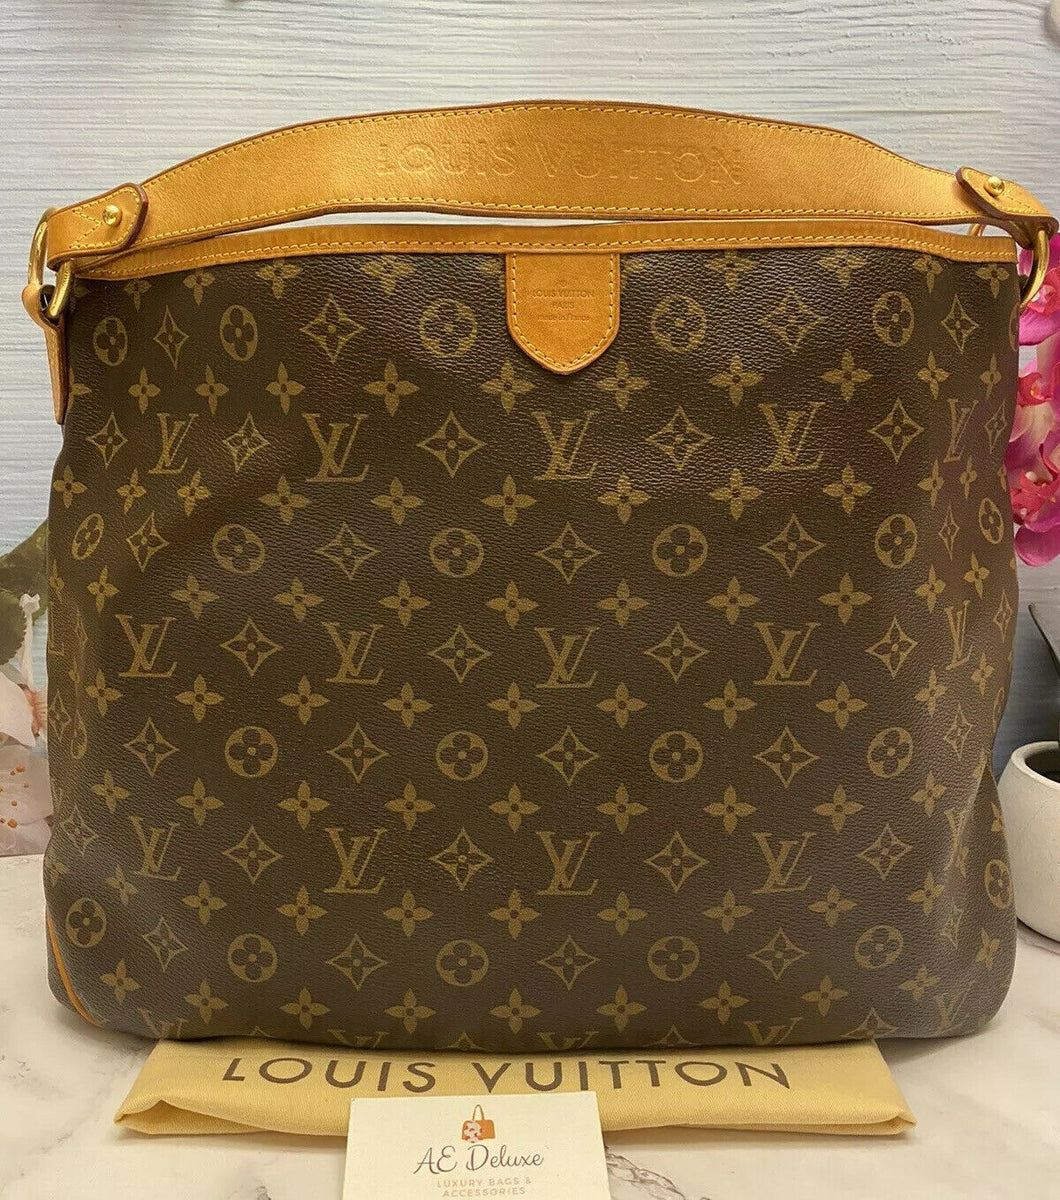 Louis Vuitton Delightful MM